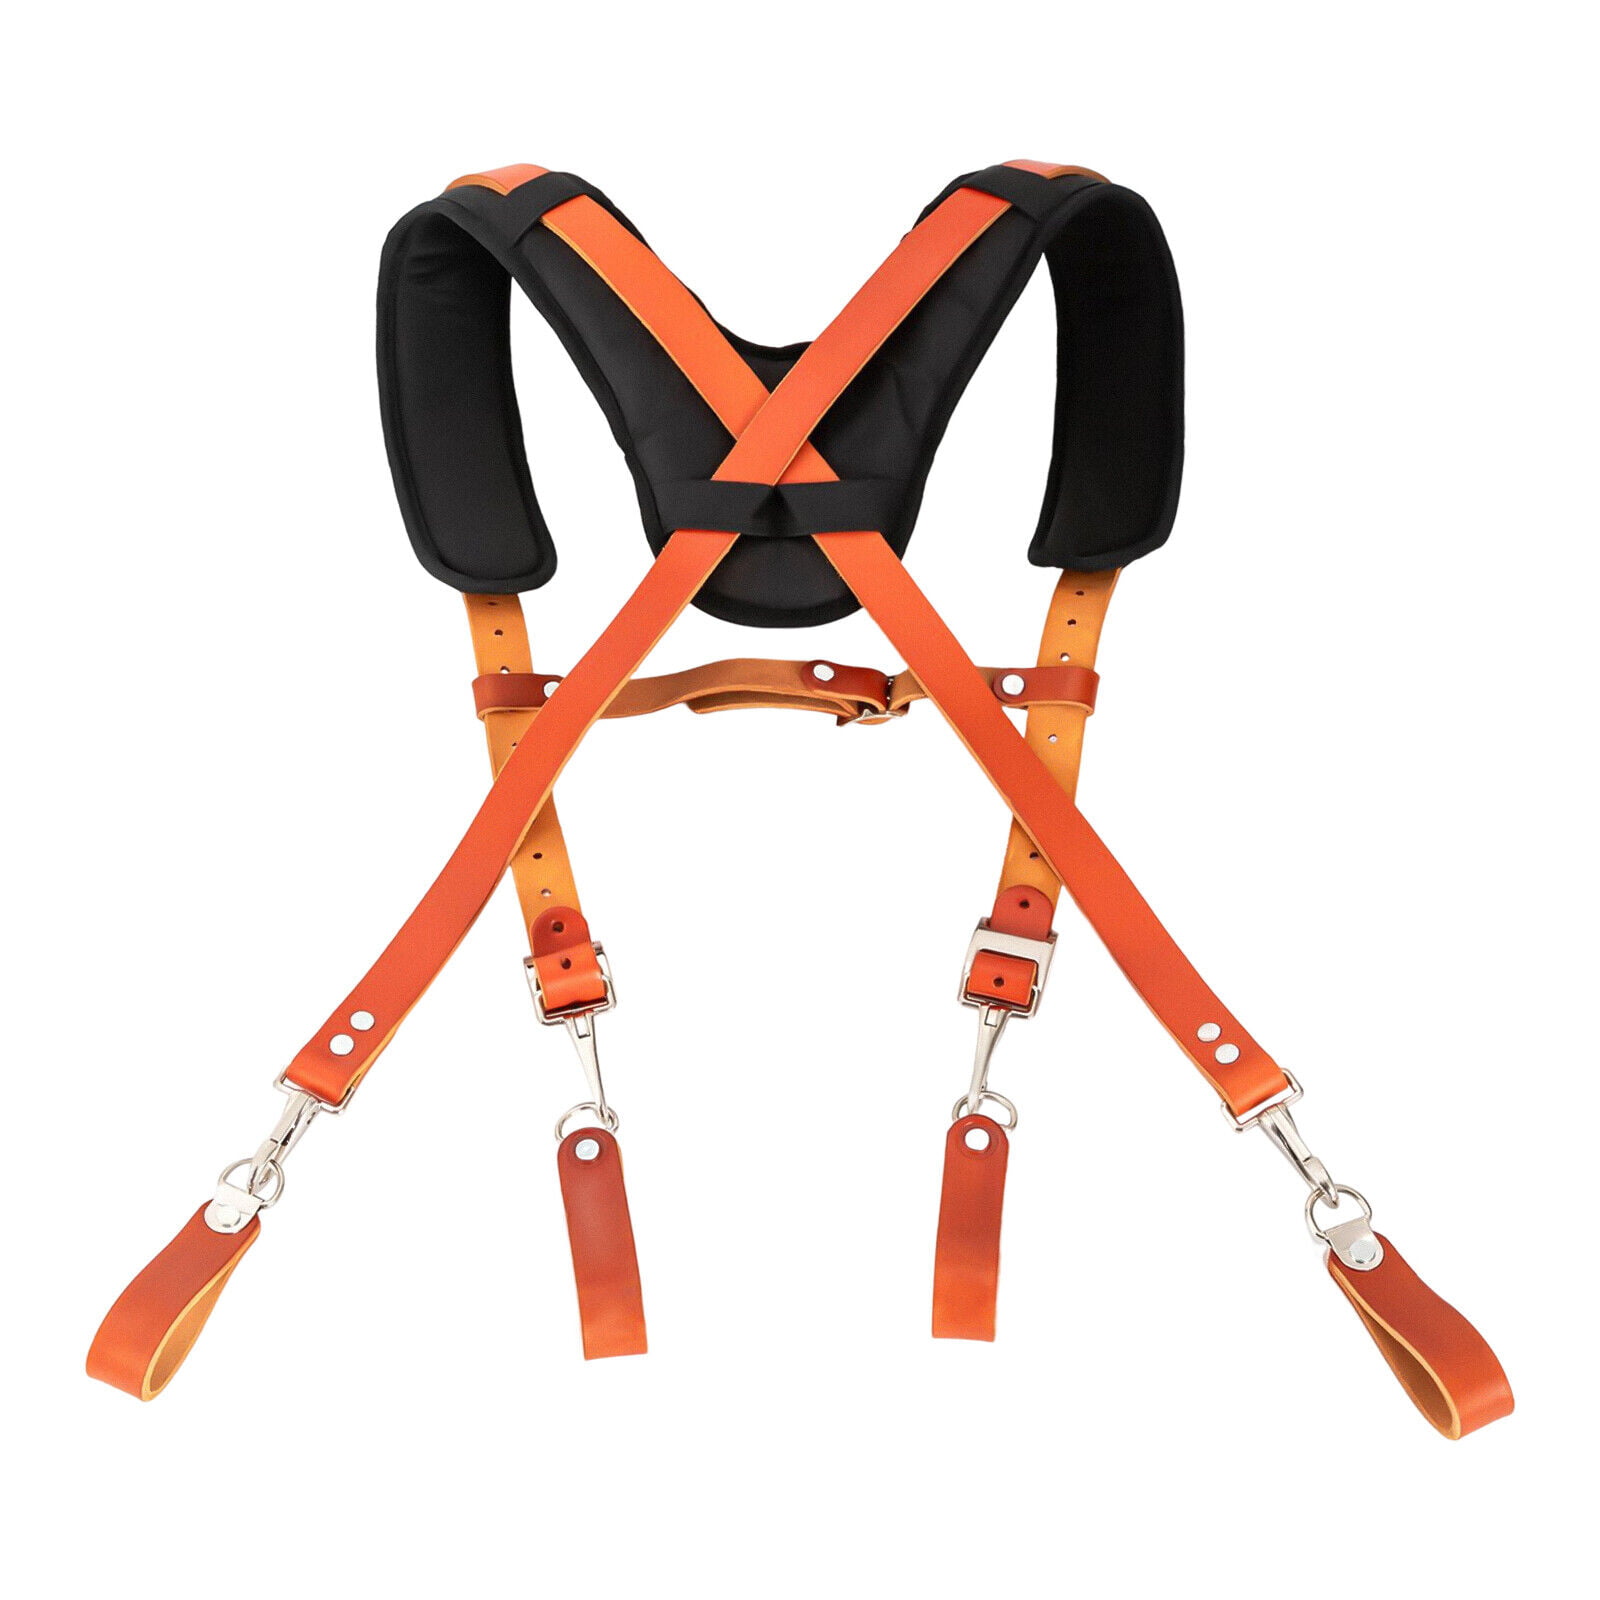 Miumaeov Leather Tool Belt with Suspenders 4 Detachable D-Loop